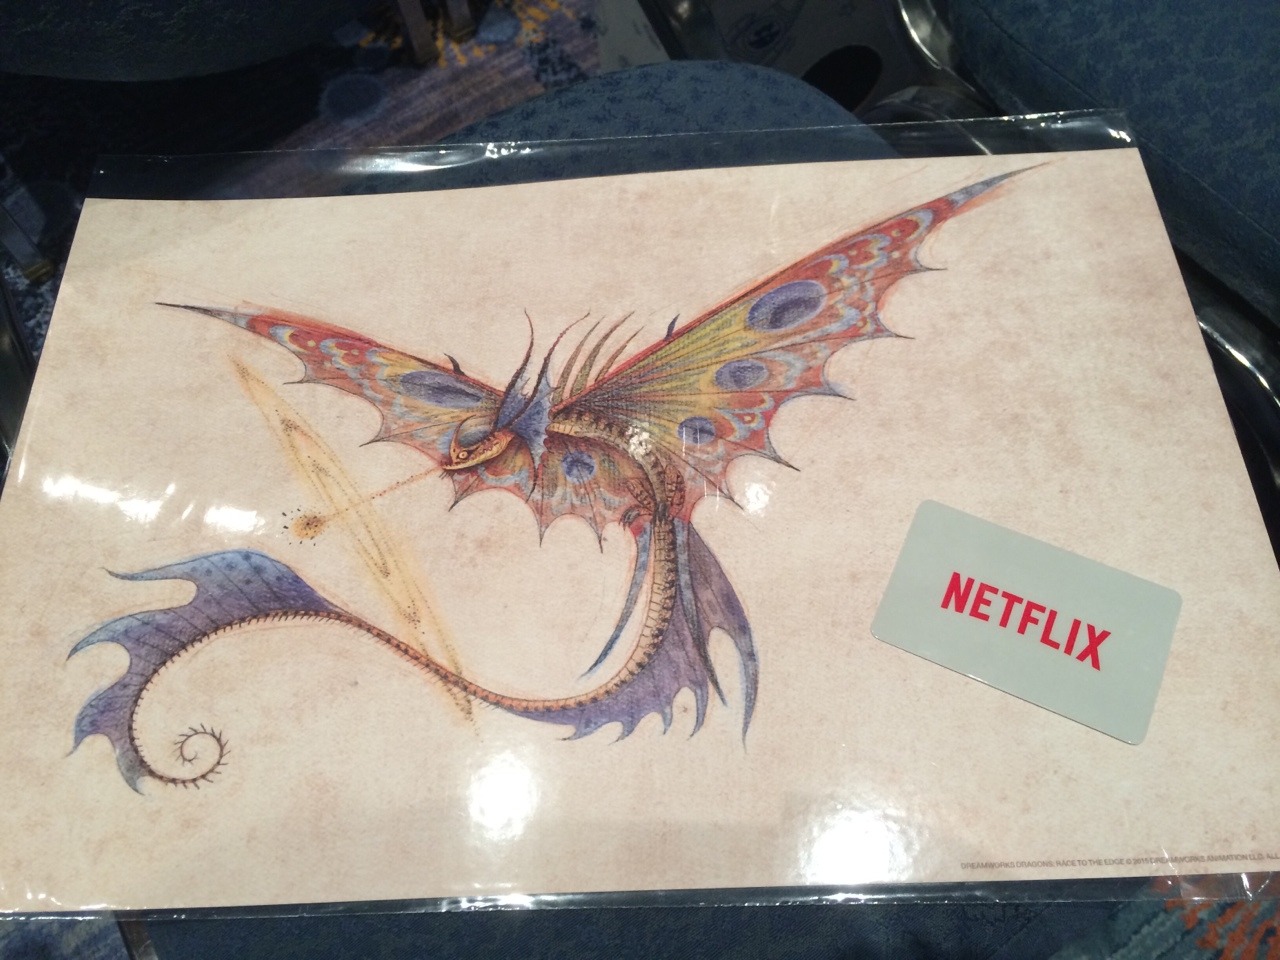  Dragons saison 3 : Par delà les rives [Avec spoilers] (2015) DreamWorks - Page 2 Tumblr_nmcgipM70M1qzpocjo3_1280